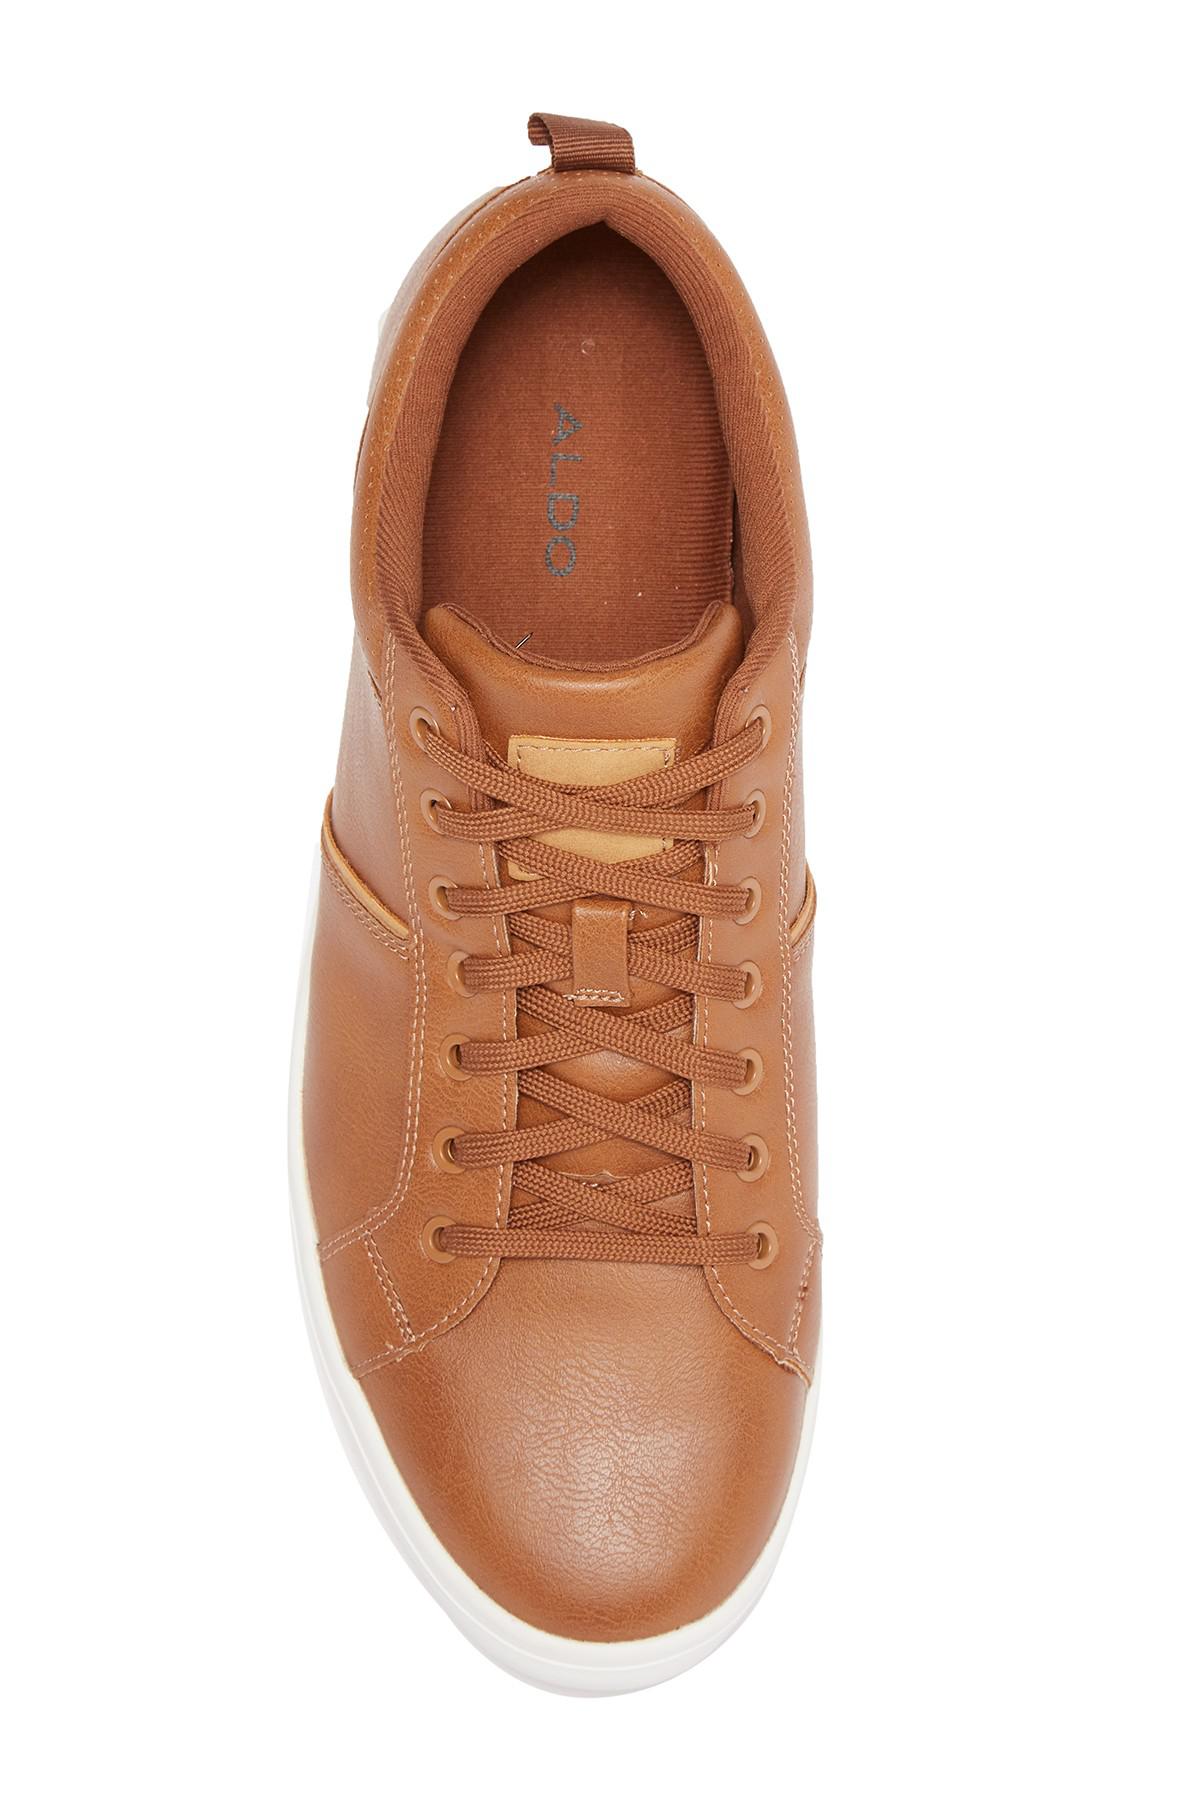 ALDO Ciresen Leather Sneaker in 28 